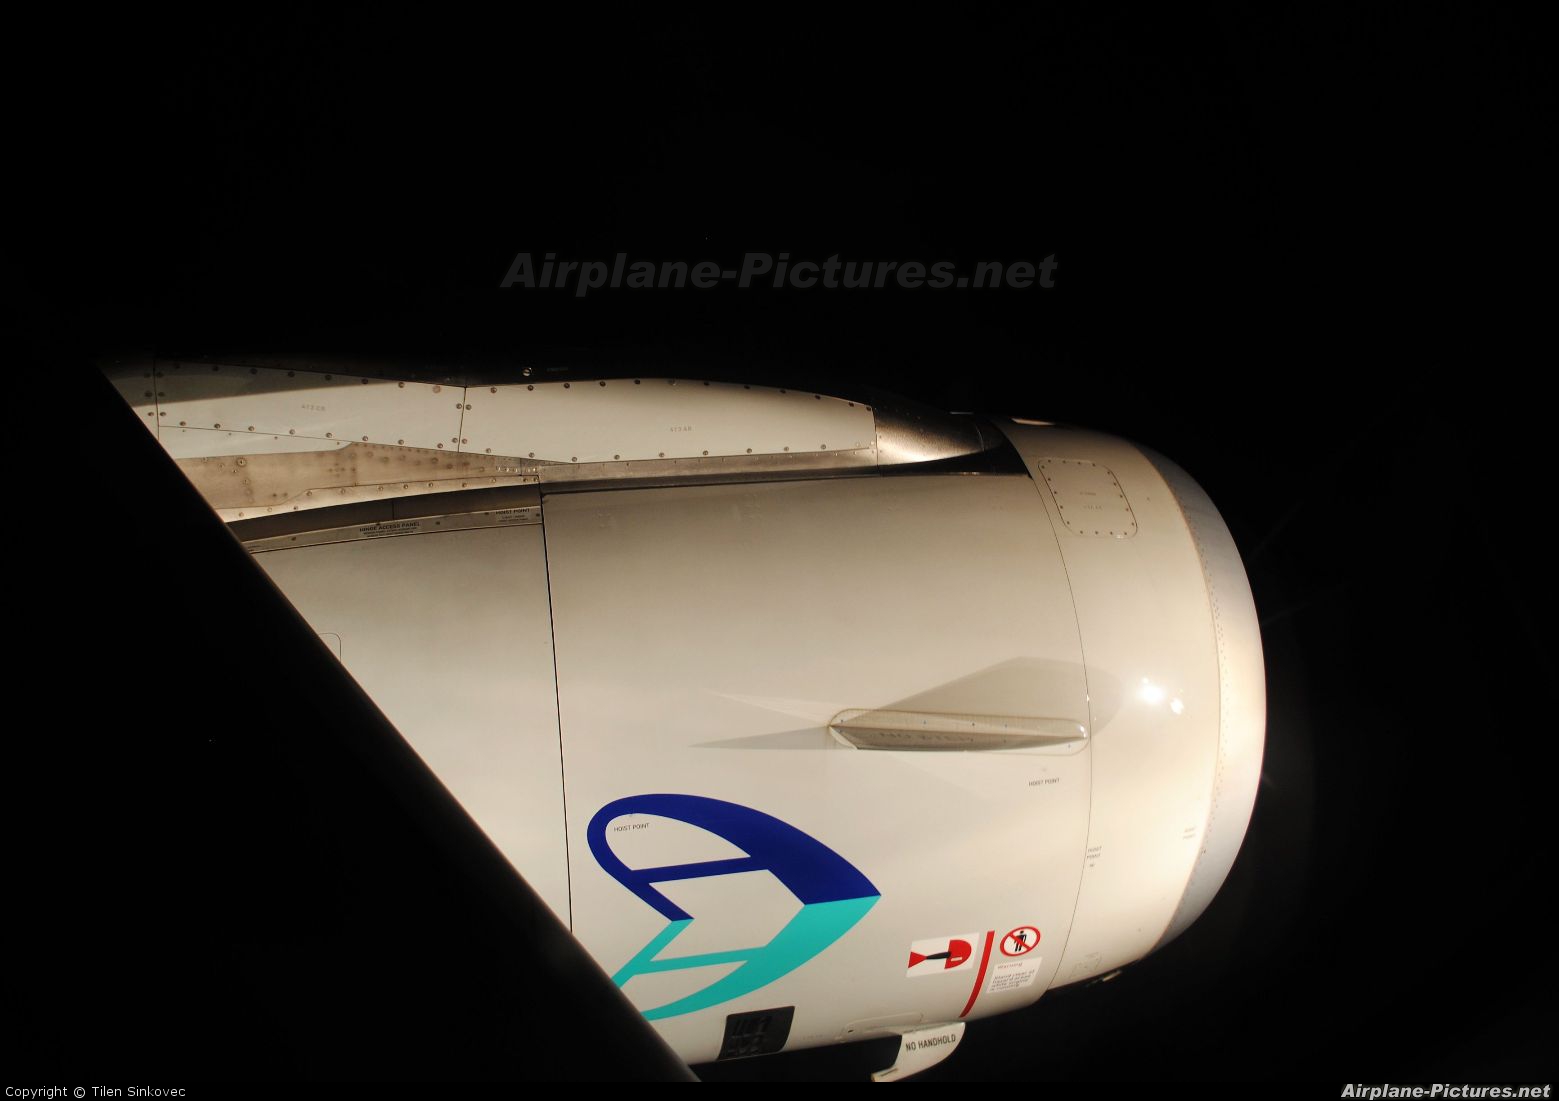 Adria Airways S5-AAP aircraft at In Flight - International